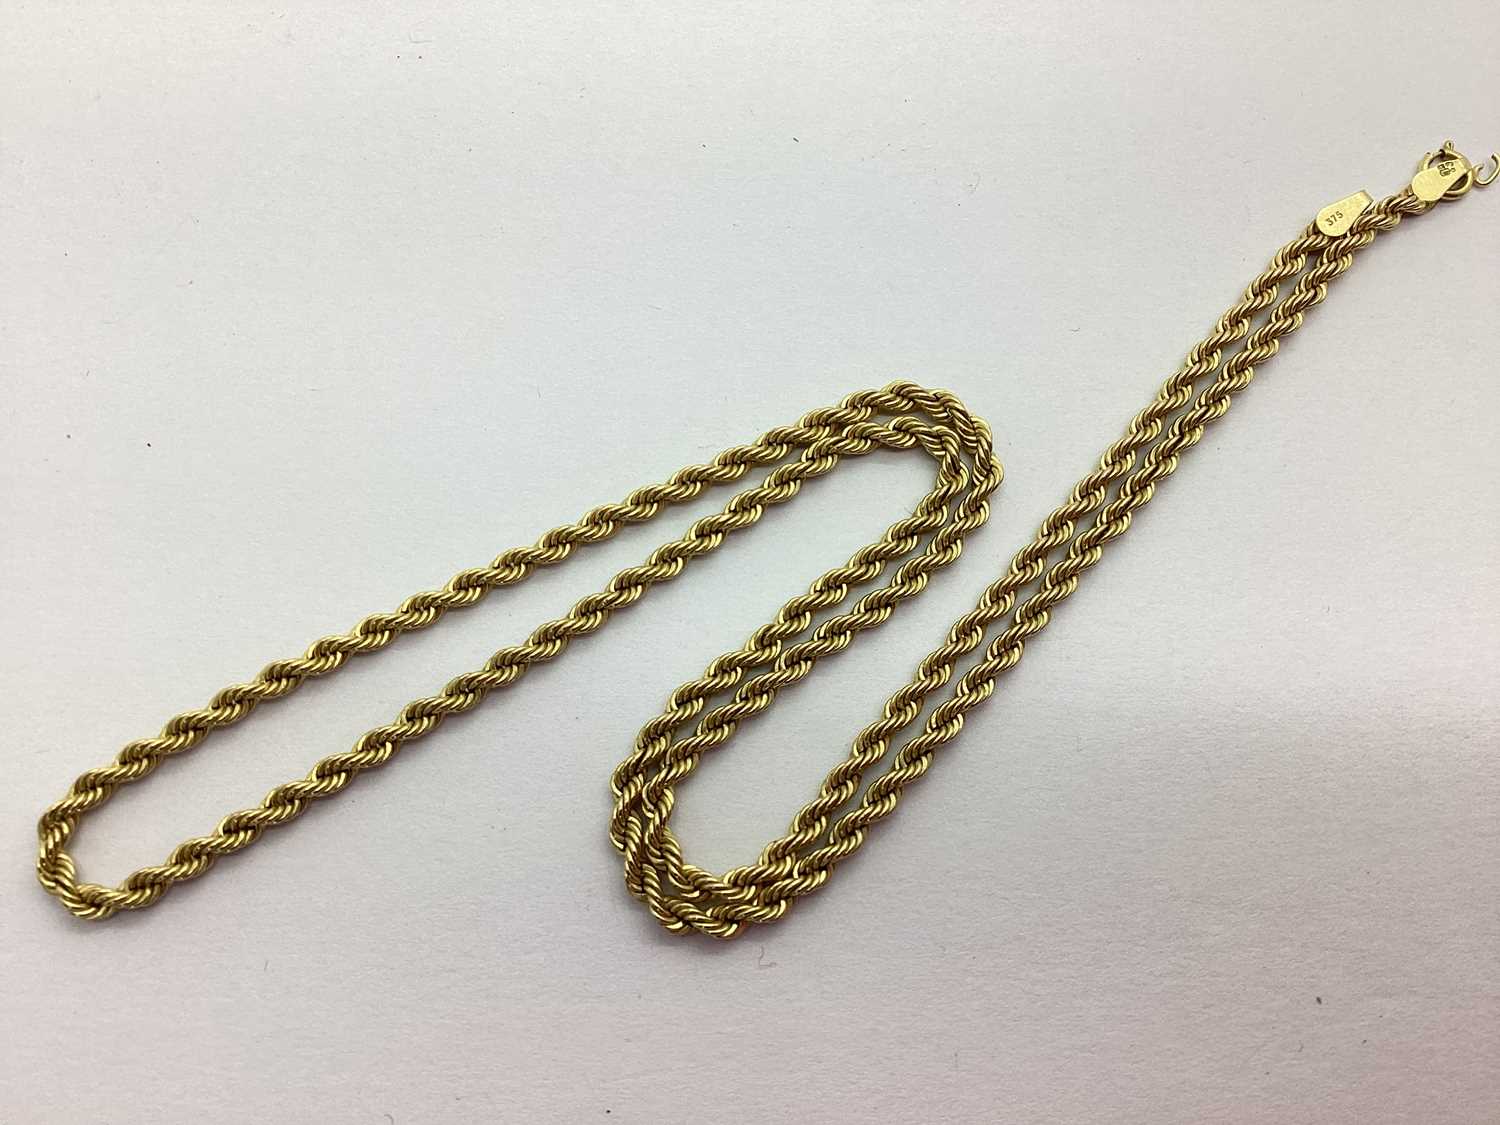 A 9ct Gold Ropetwist Necklace, (clasp damage), 45cm long (3.1grams).